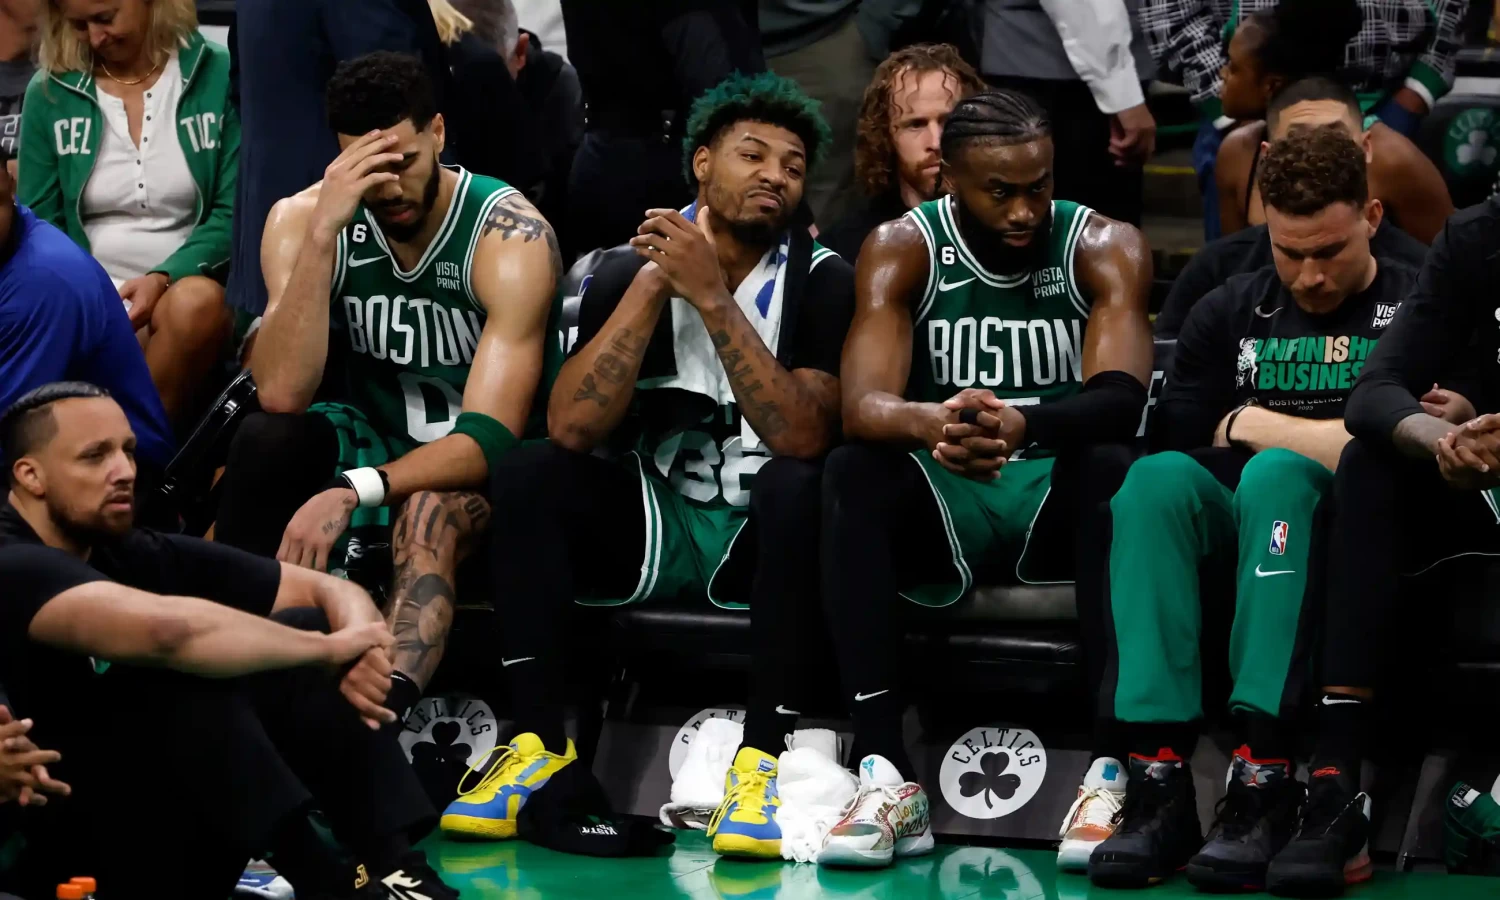 The Miami Heat brutally ended the Celtics’ season of living dangerously